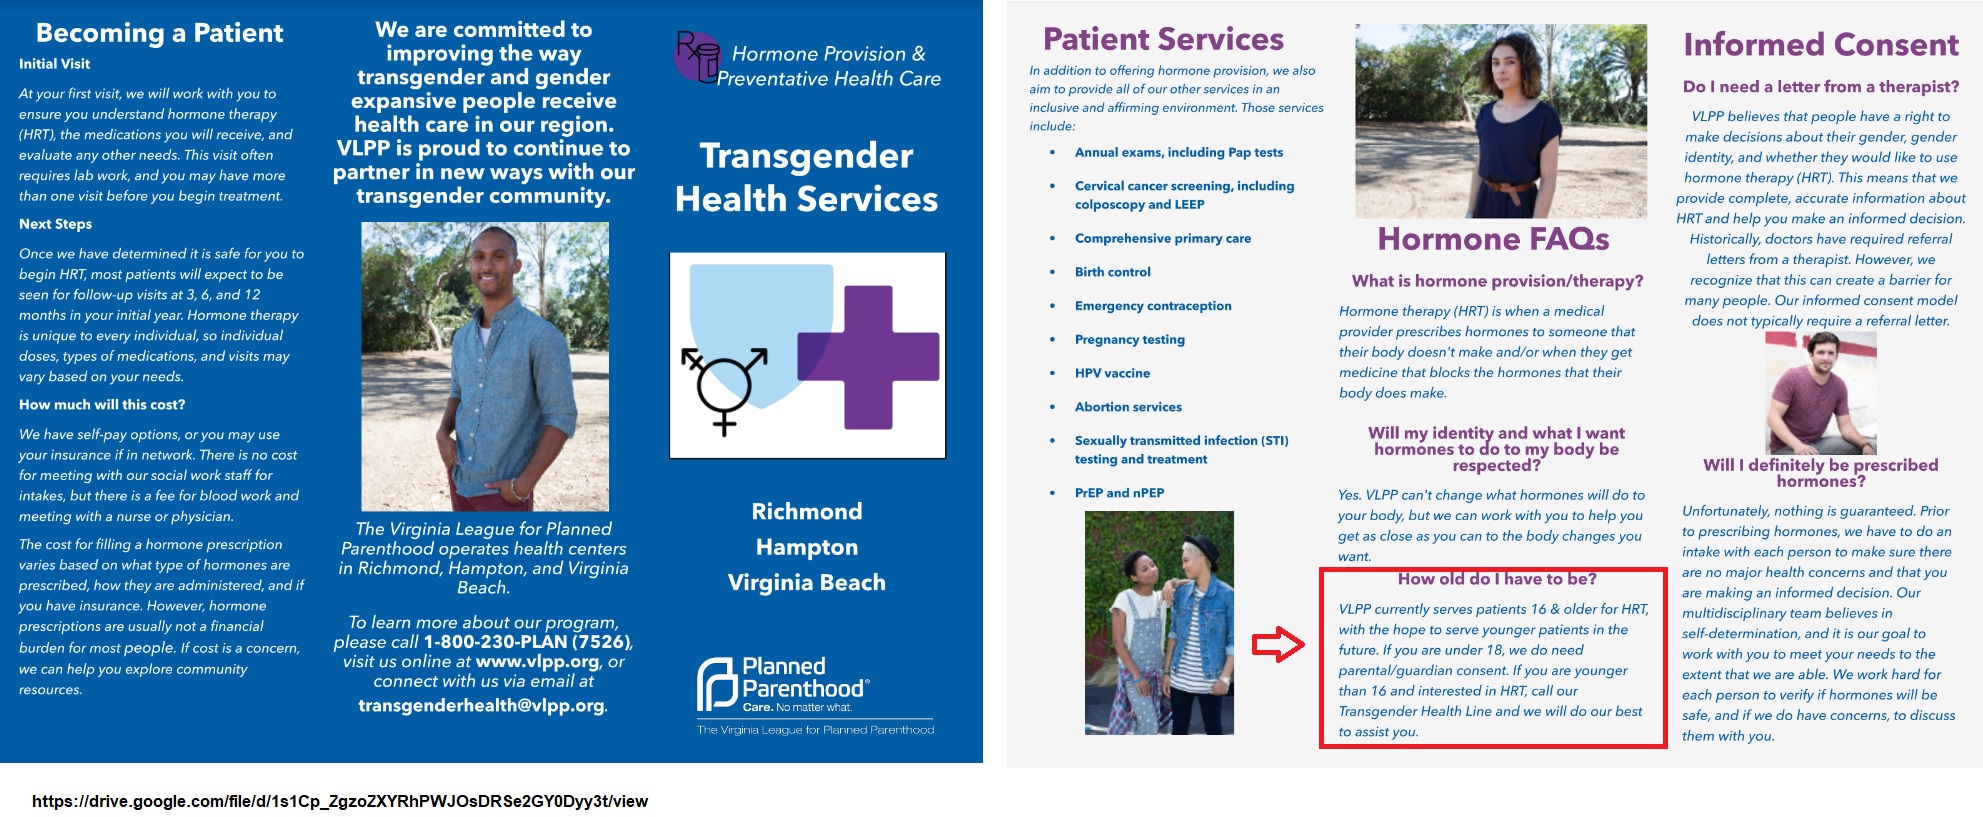 Image: Virginia League for Planned Parenthood transgender brochure